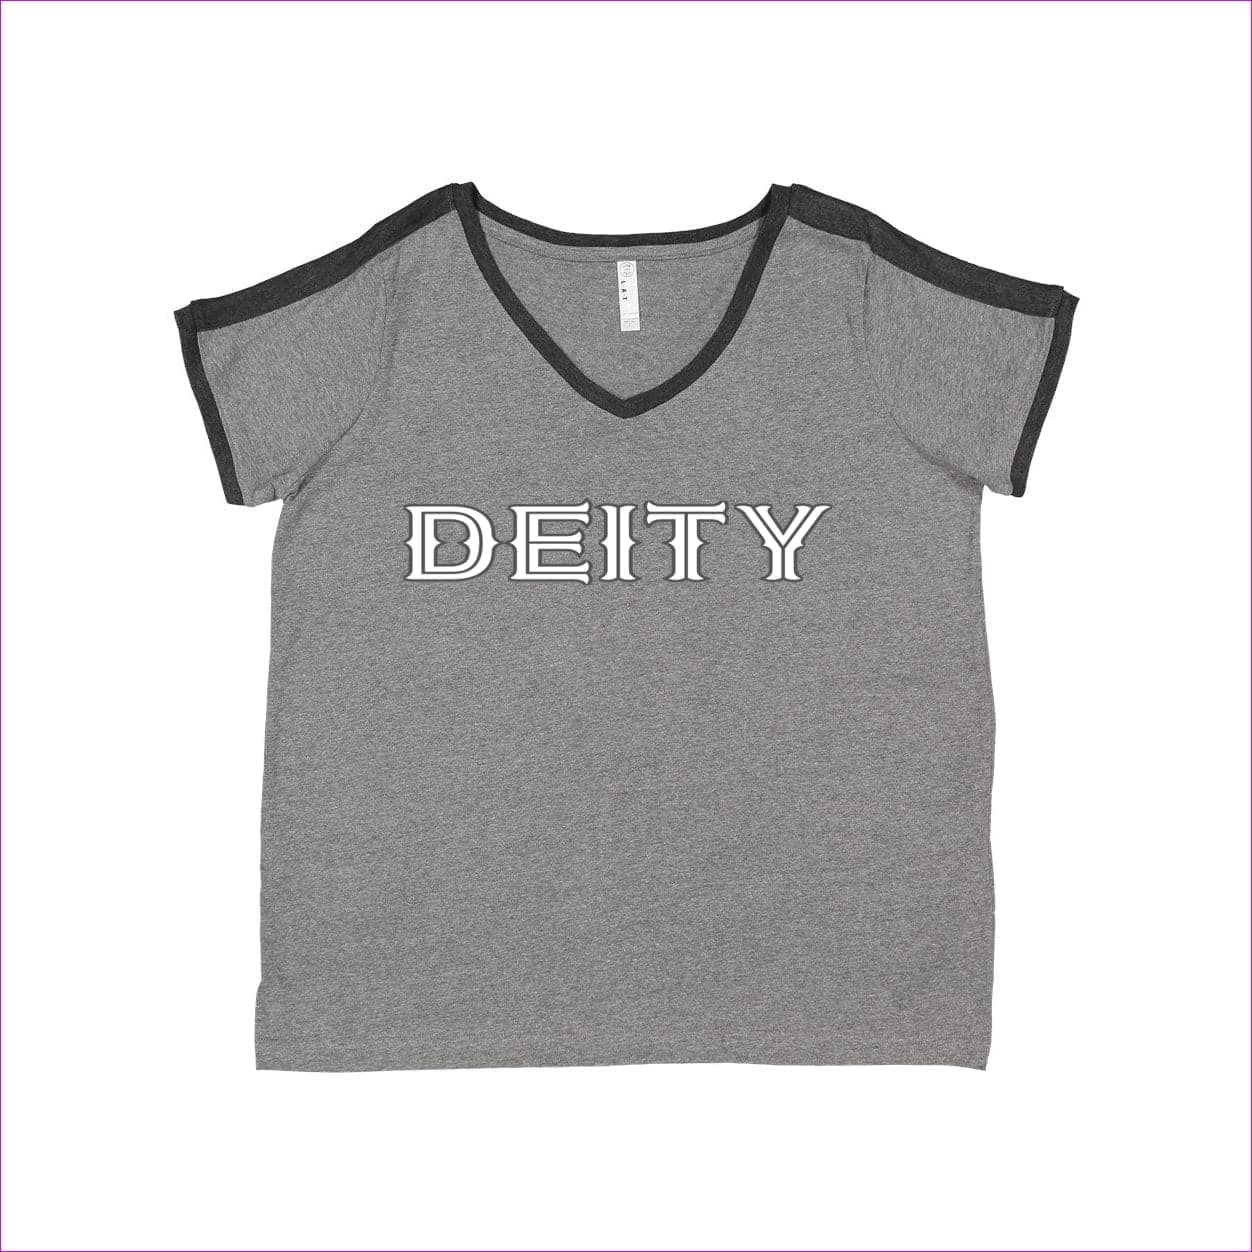 Granite Heather Vintage Smoke - Deity Womens Curvy Premium Jersey V-Neck Tee - Womens T-Shirts at TFC&H Co.